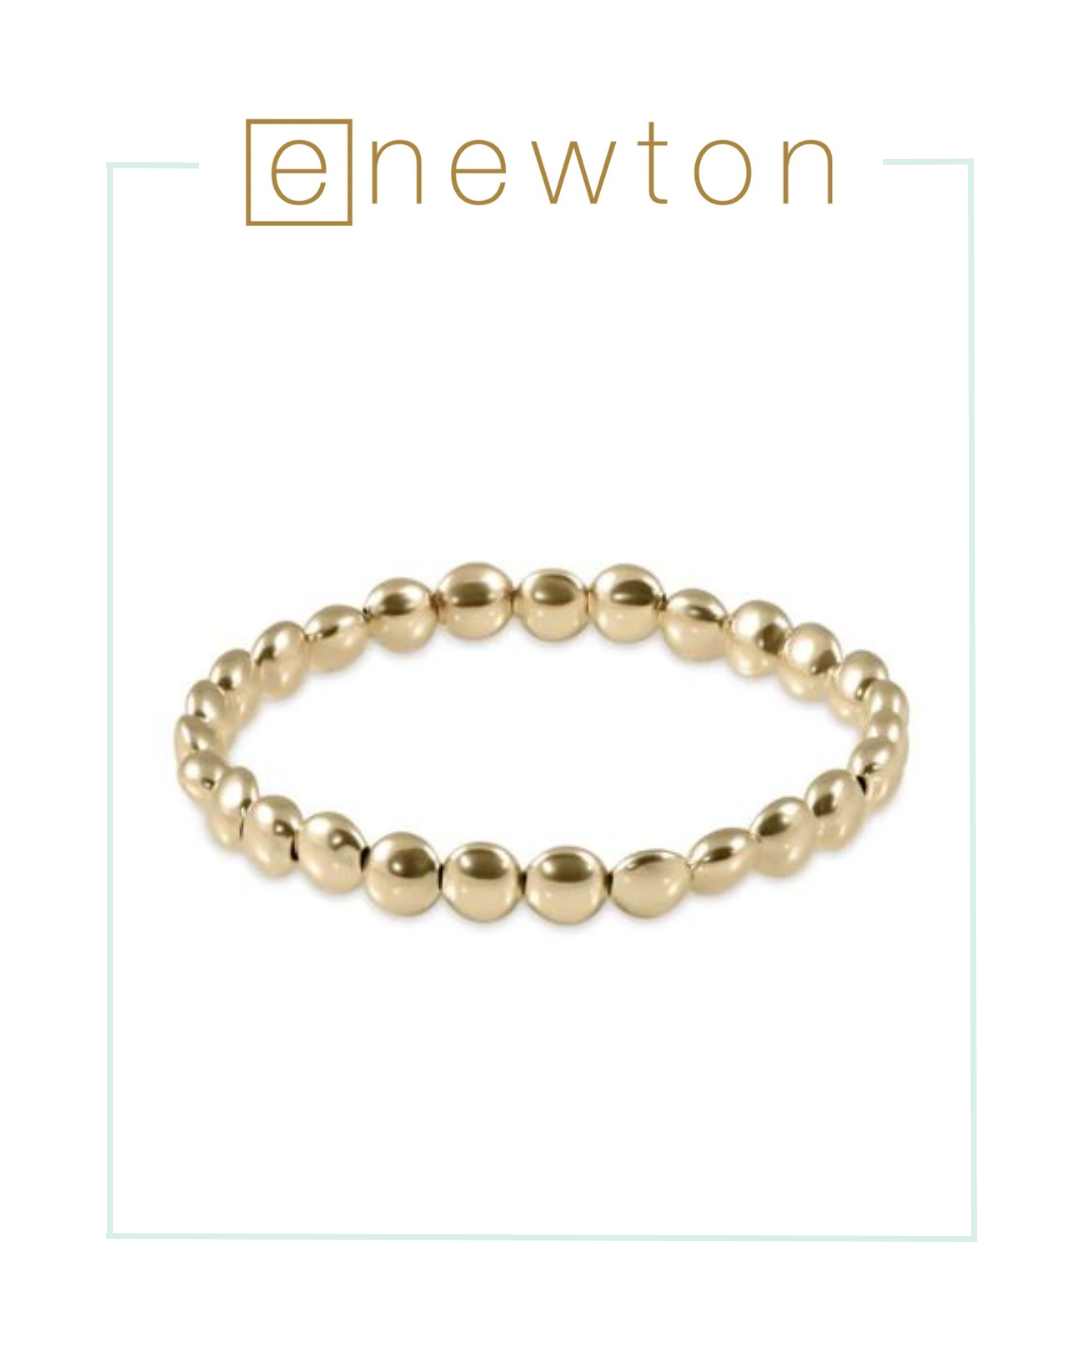 E Newton Honesty Gold 6mm Bead Bracelet-Bracelets-ENEWTON-The Village Shoppe, Women’s Fashion Boutique, Shop Online and In Store - Located in Muscle Shoals, AL.